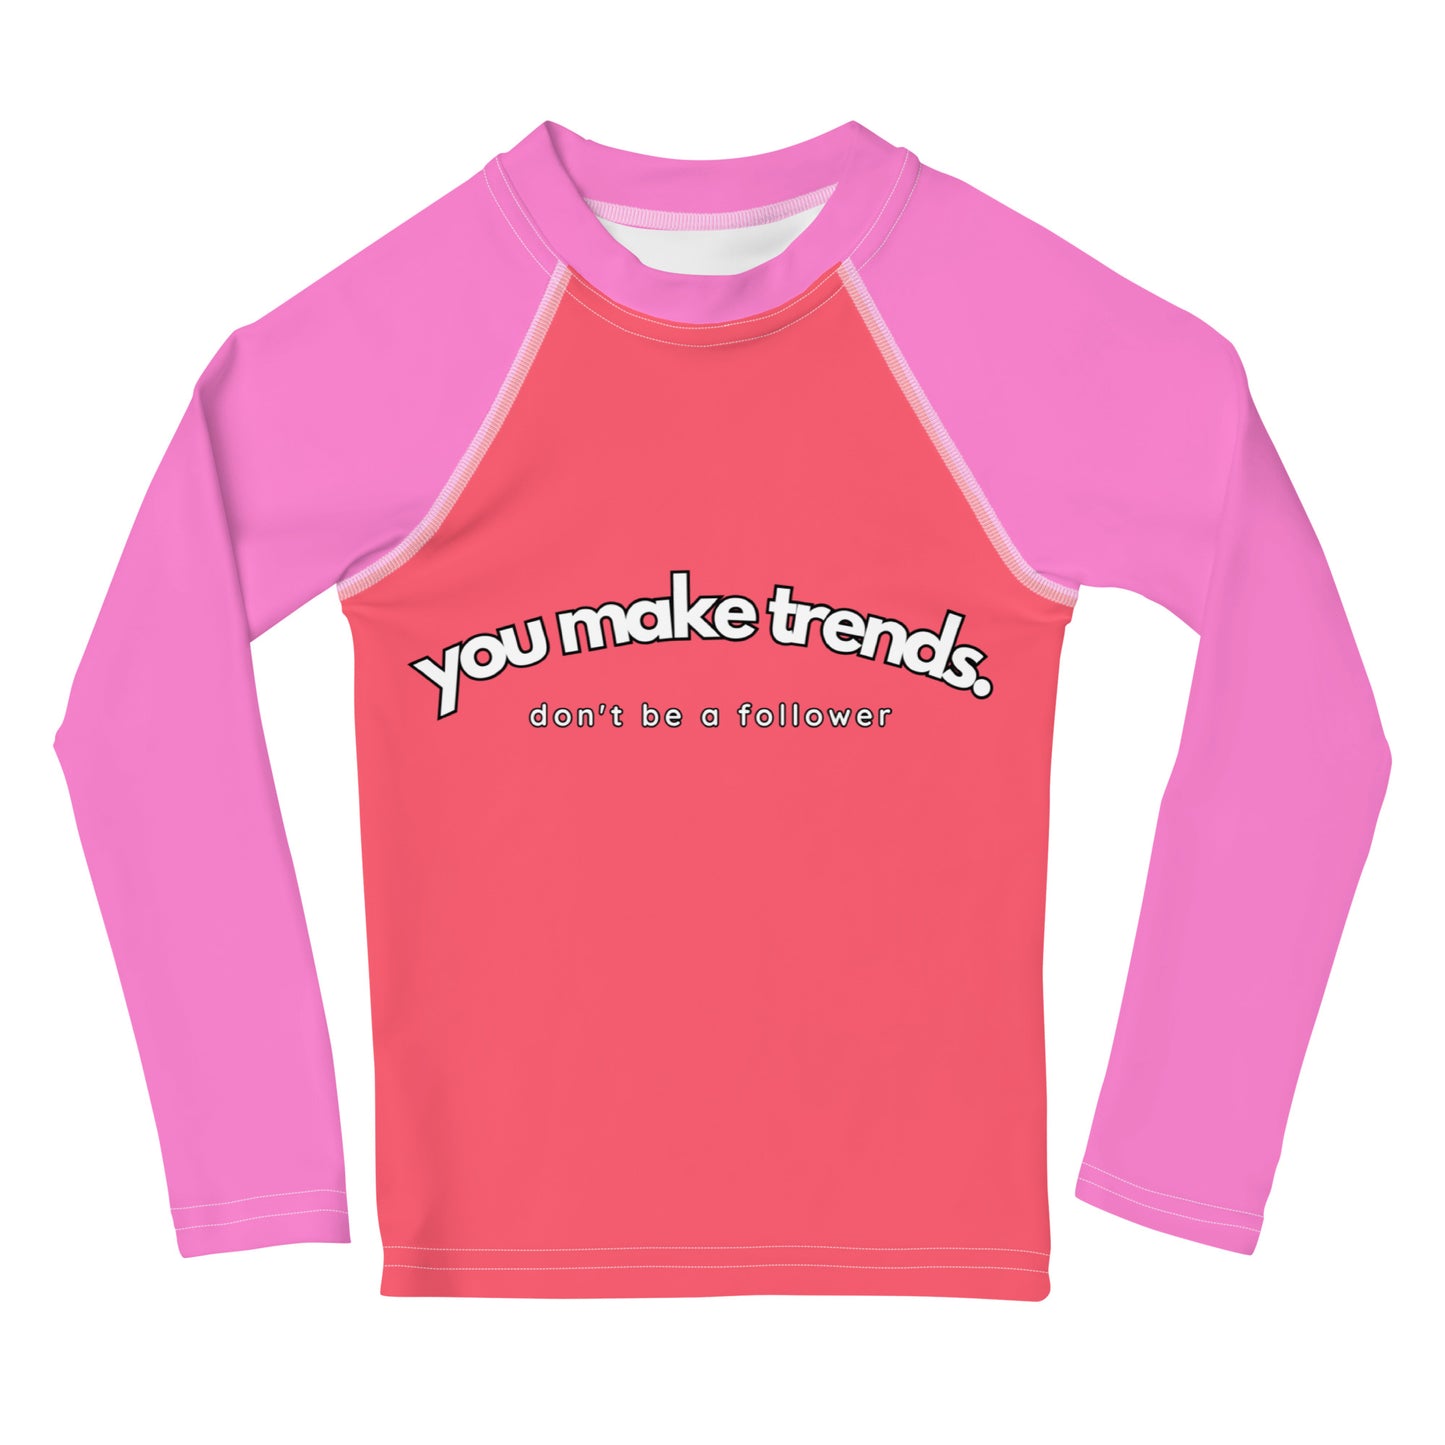 YMT classics kids long sleeve rash guard swim top UPF50 by night neon pink coral.